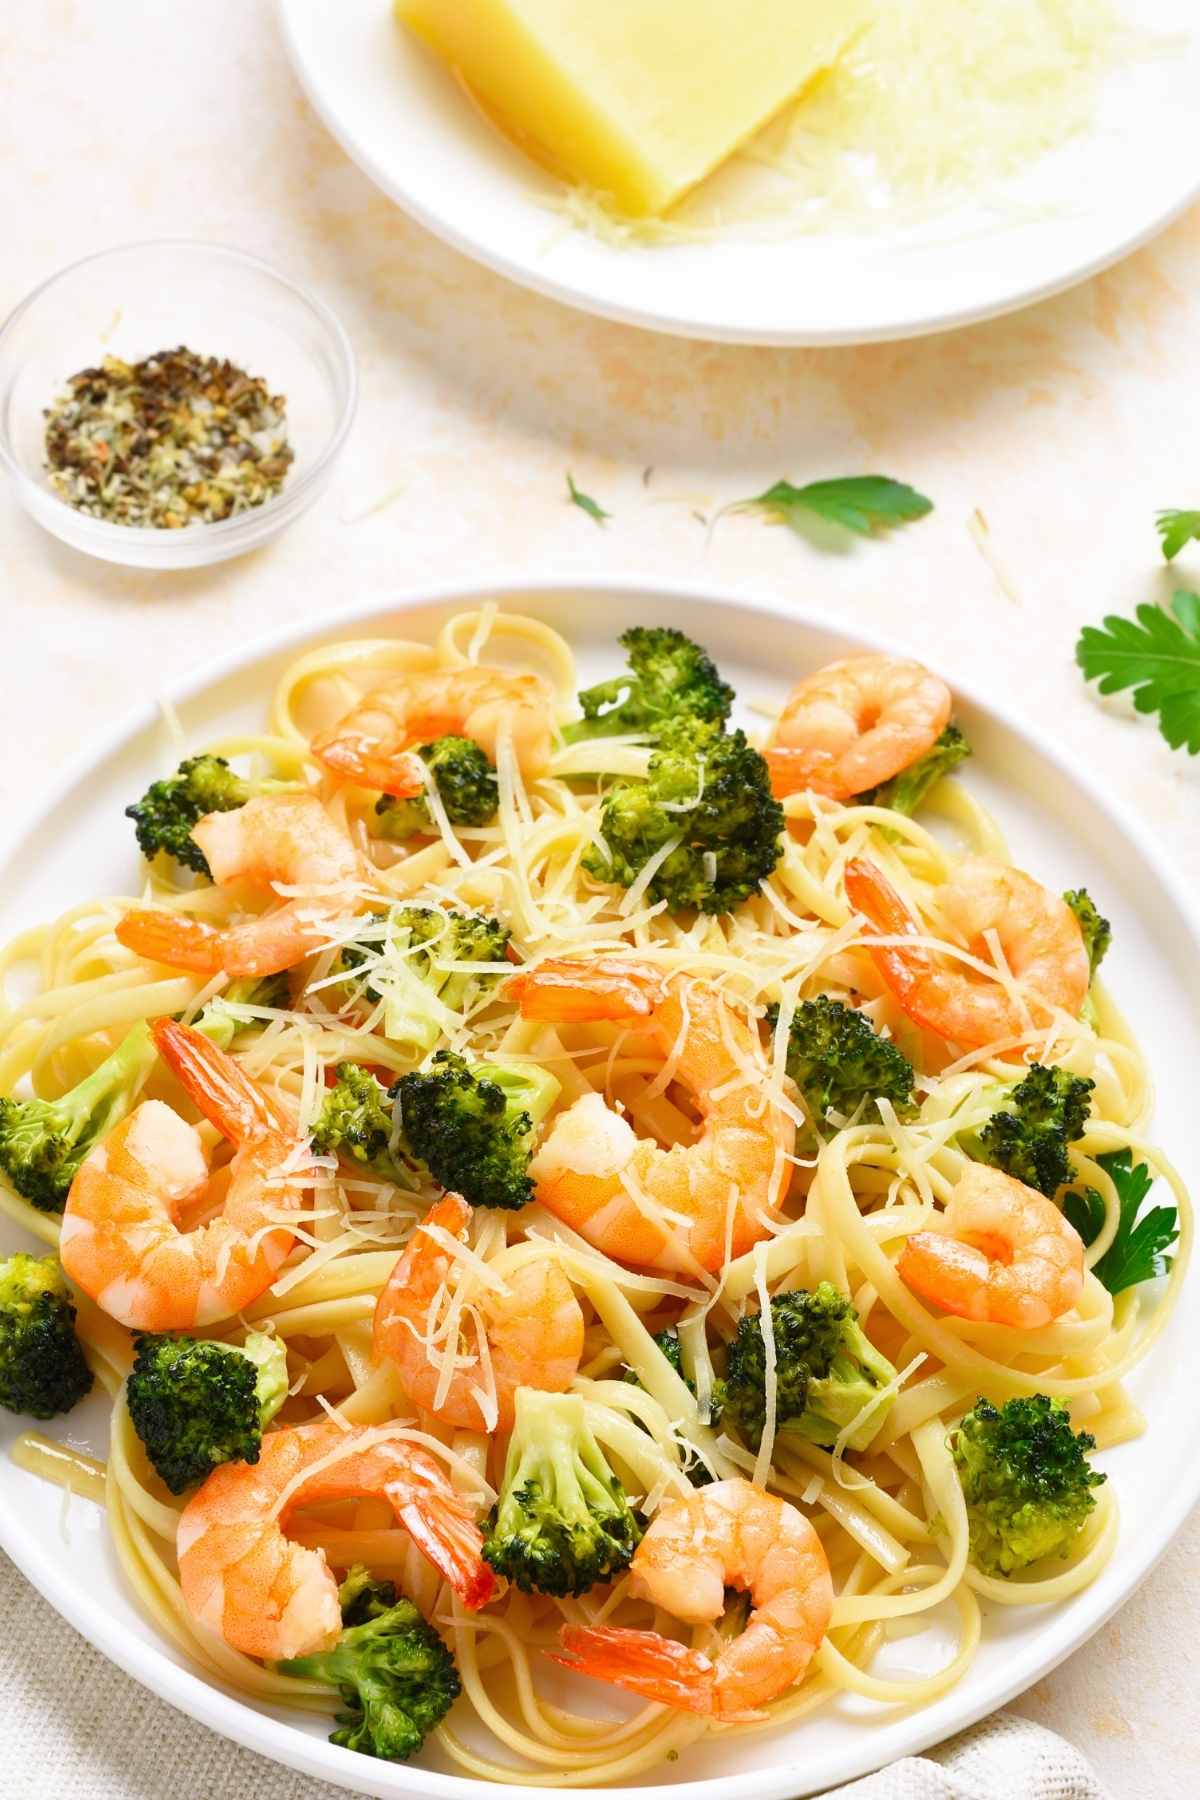 Shrimp pasta dish with broccoli